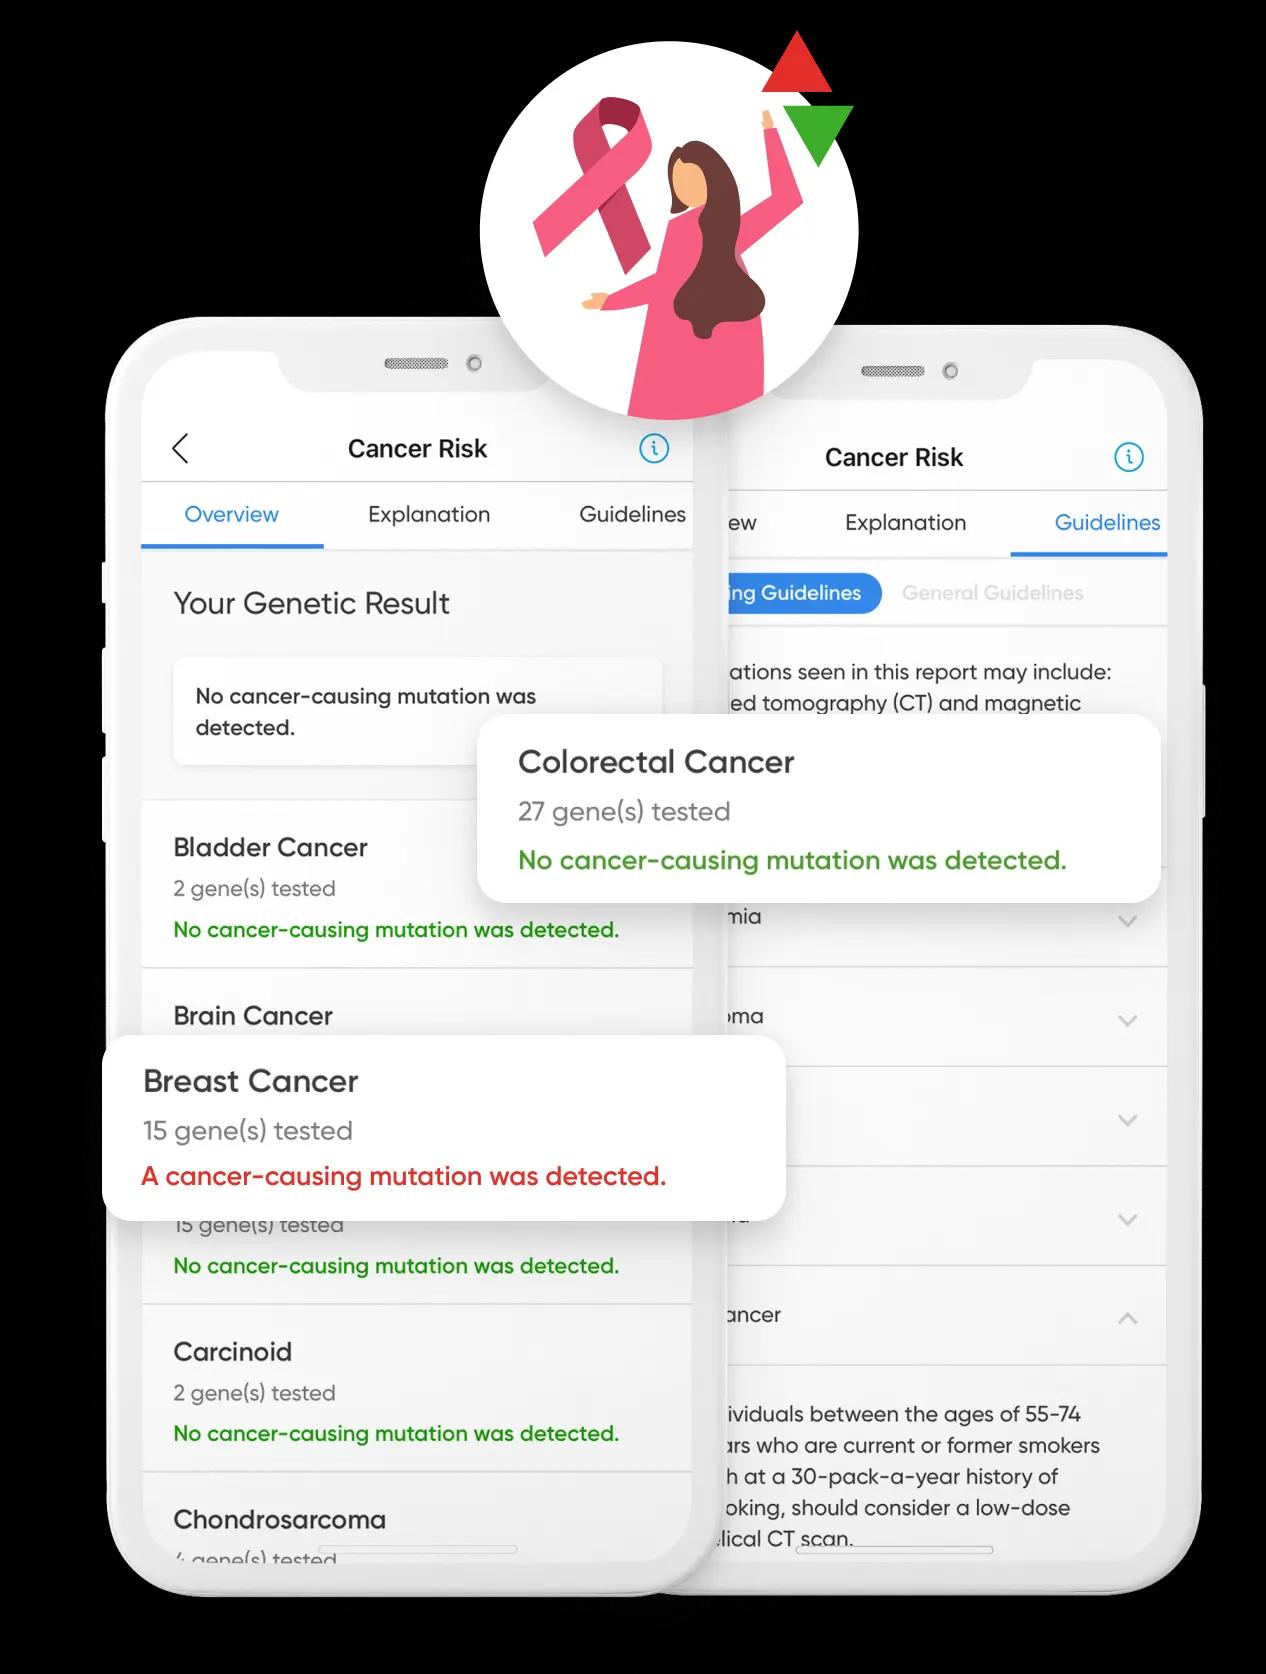 goals.diseaseRisks.feature.cancer_risks.text-mobile-image